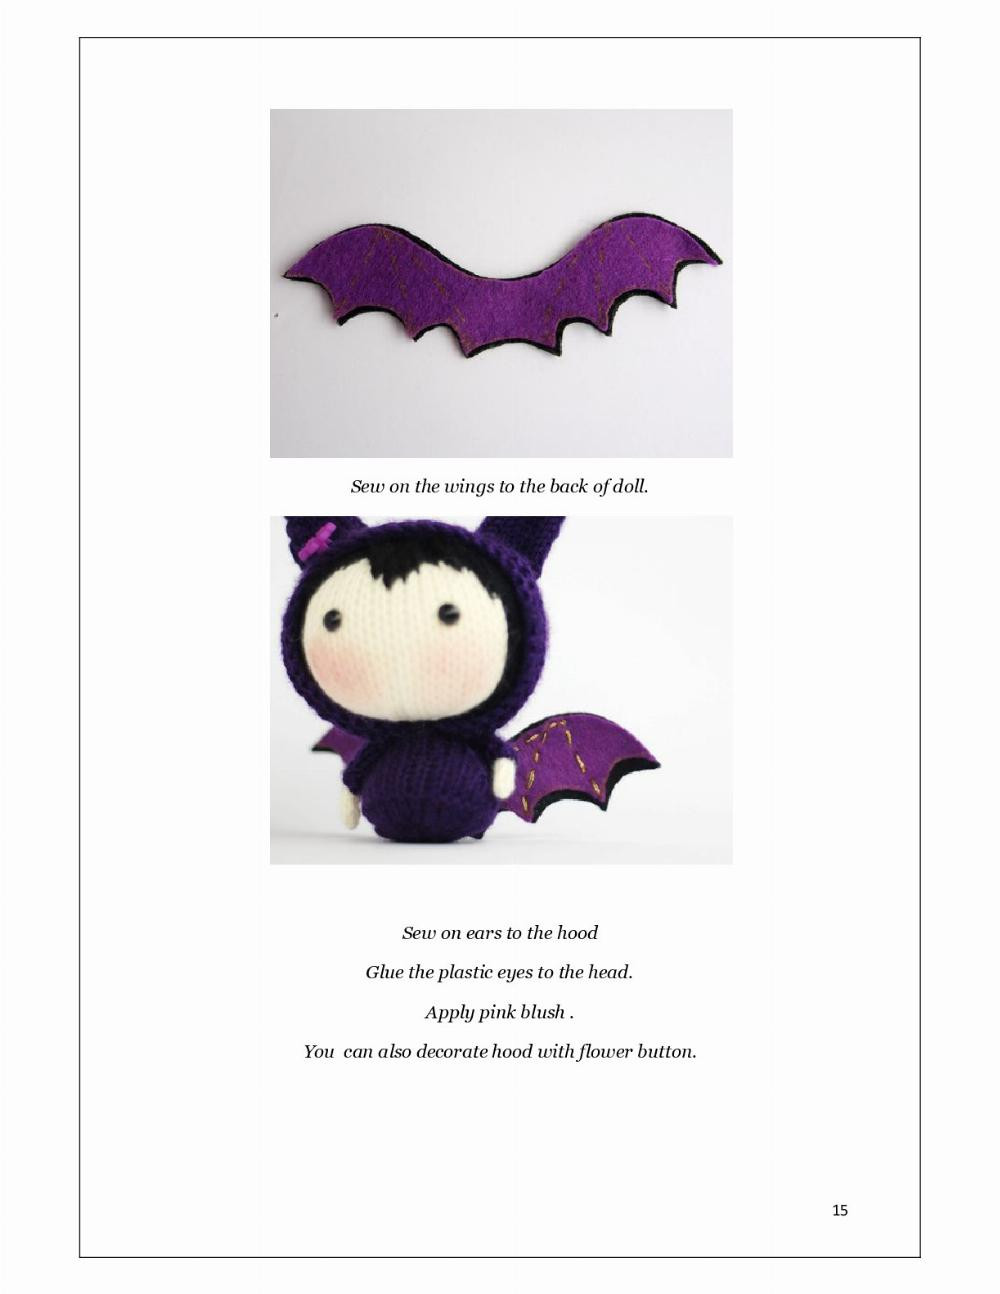 Halloween Bat Doll. Knitting pattern (knitted round)